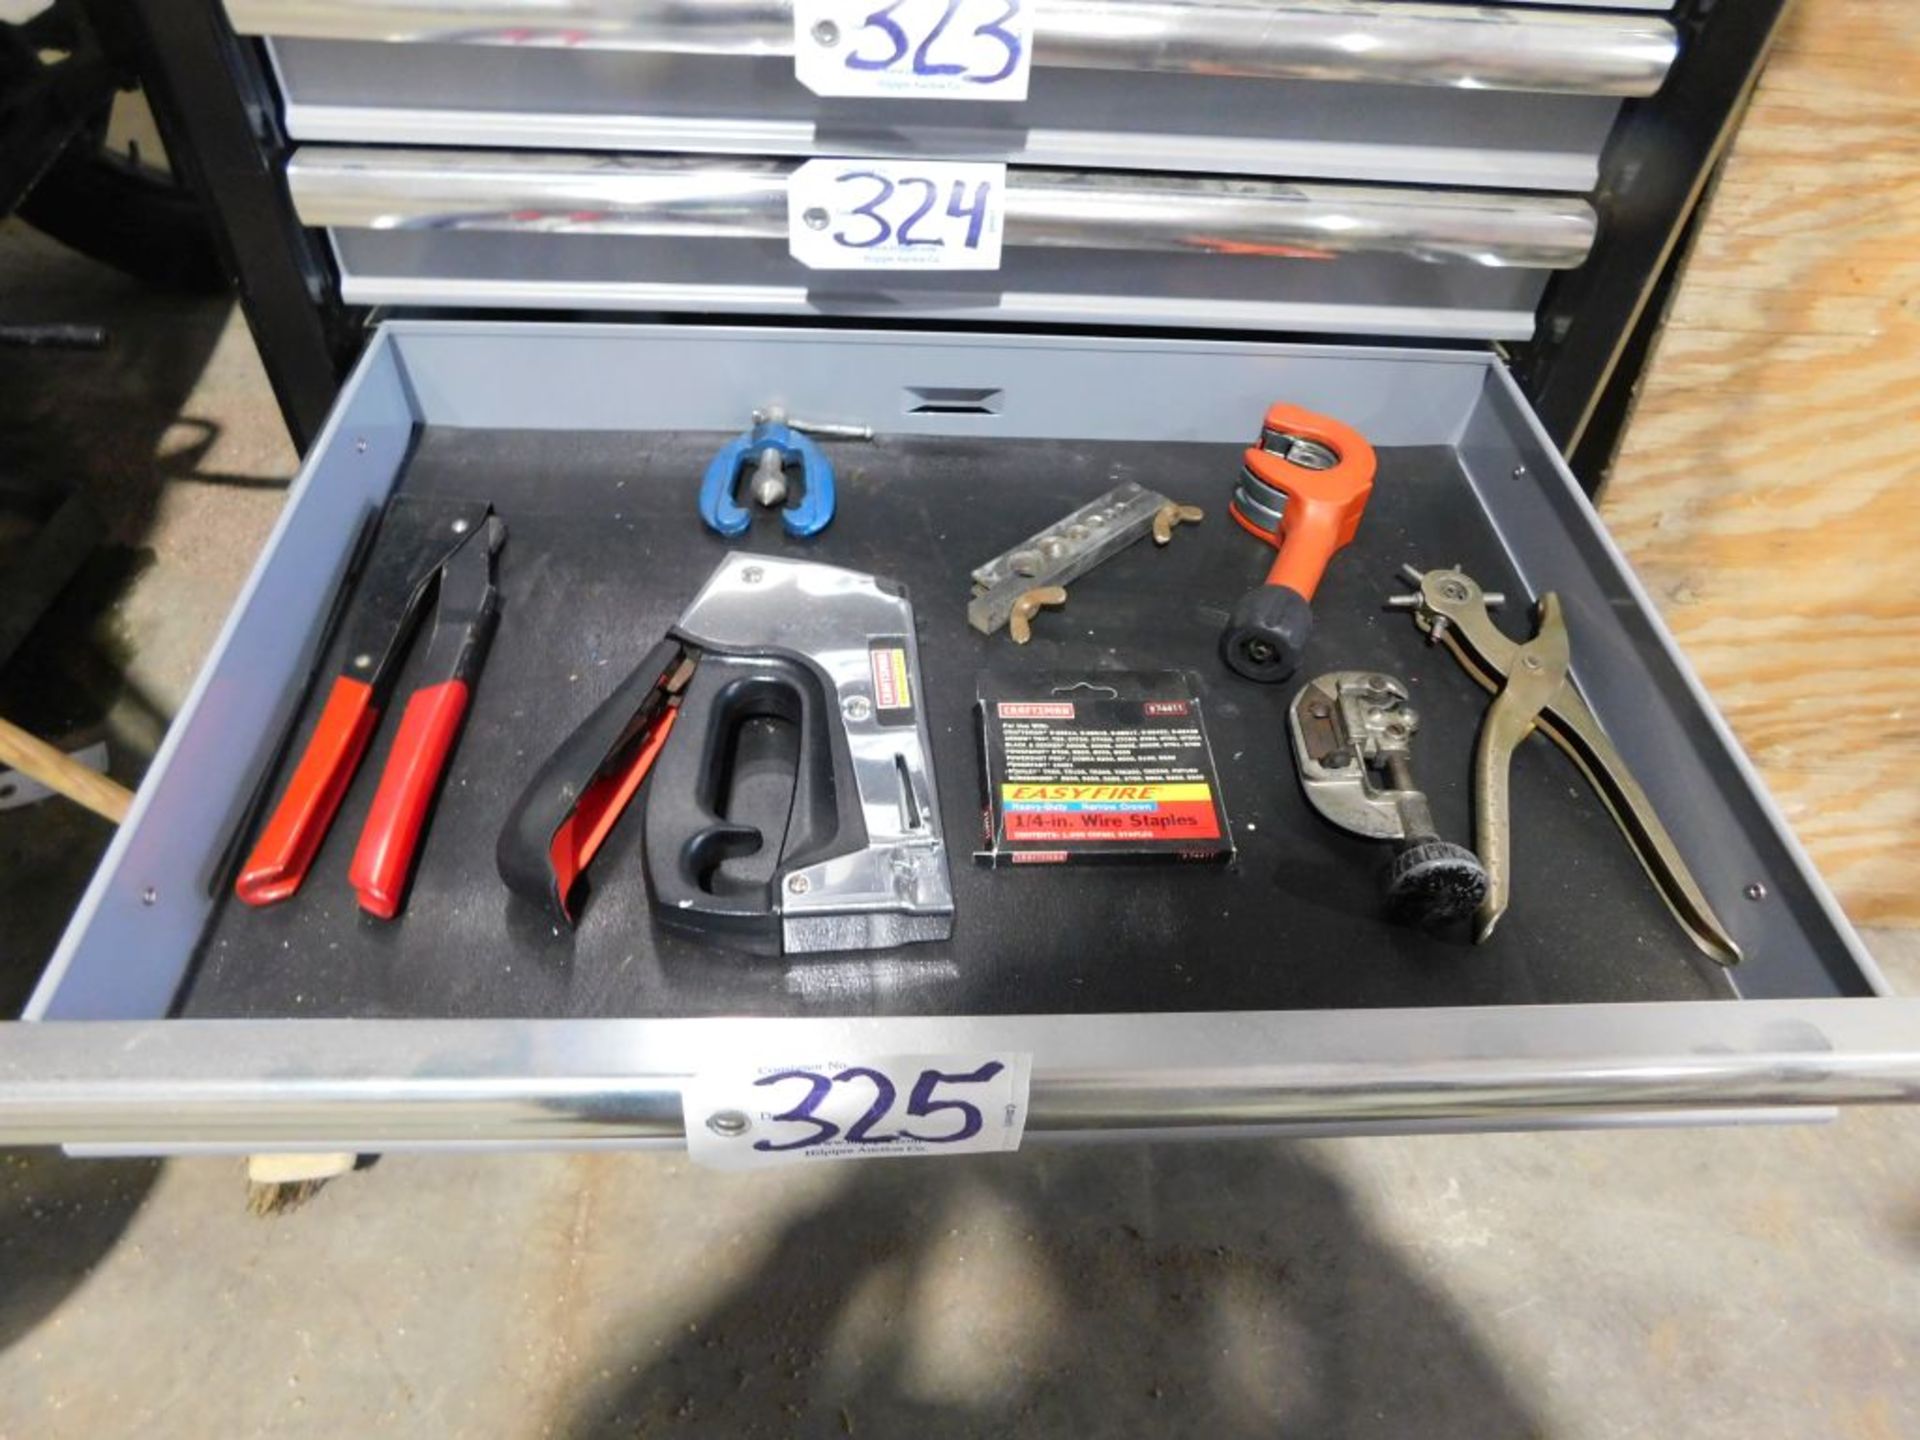 Assorted tools contents of drawer: flaring tools, staple gun, tube cutter (8 pcs.), pop rivet